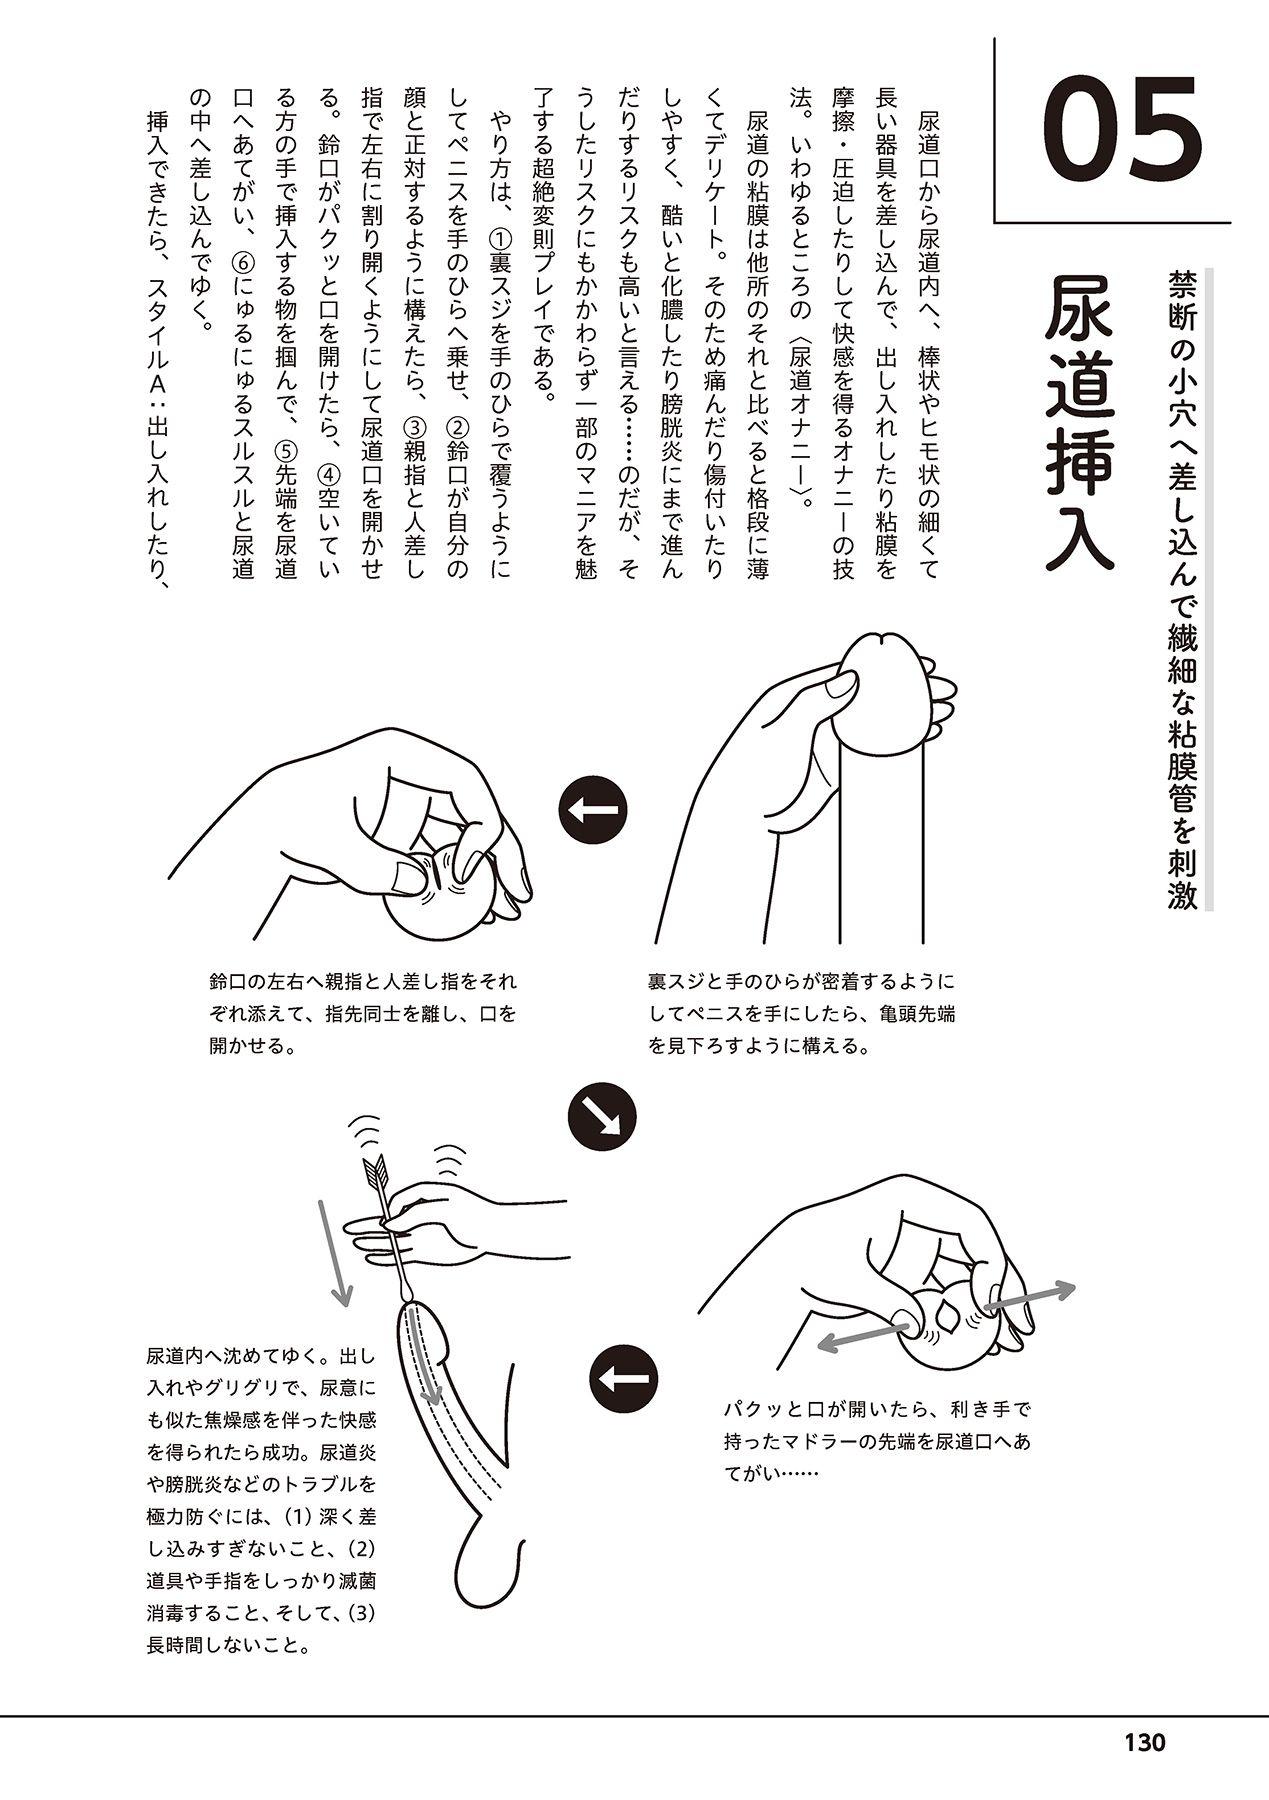 Otoko no Jii Onanie Kanzen Manual Illustration Han...... Onanie Play 131